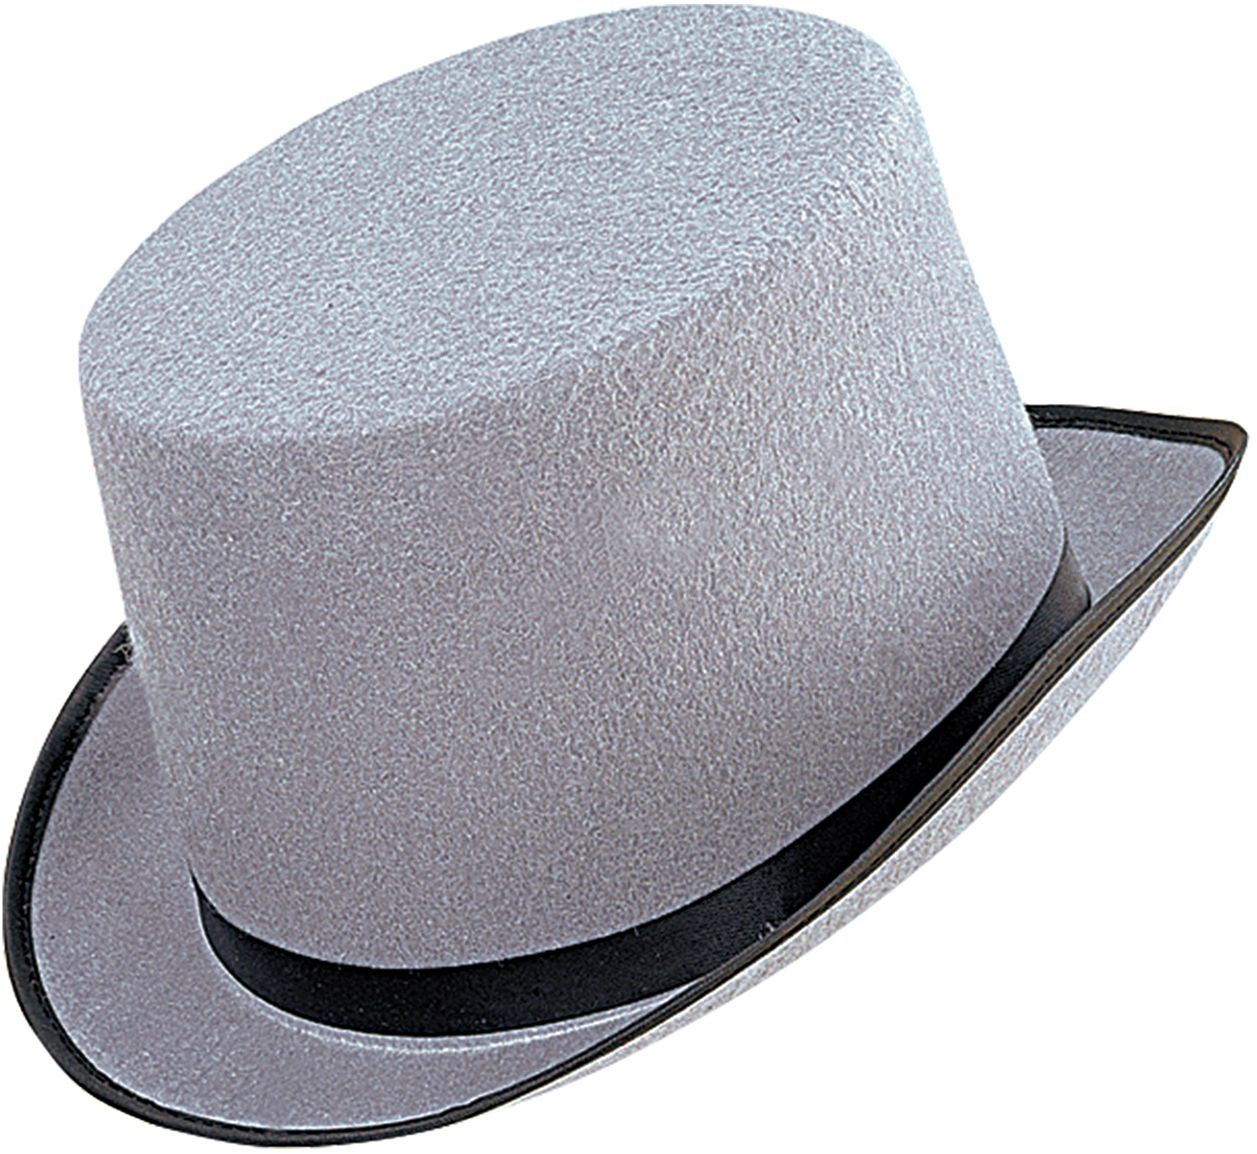 Grote hoge hoed grijs